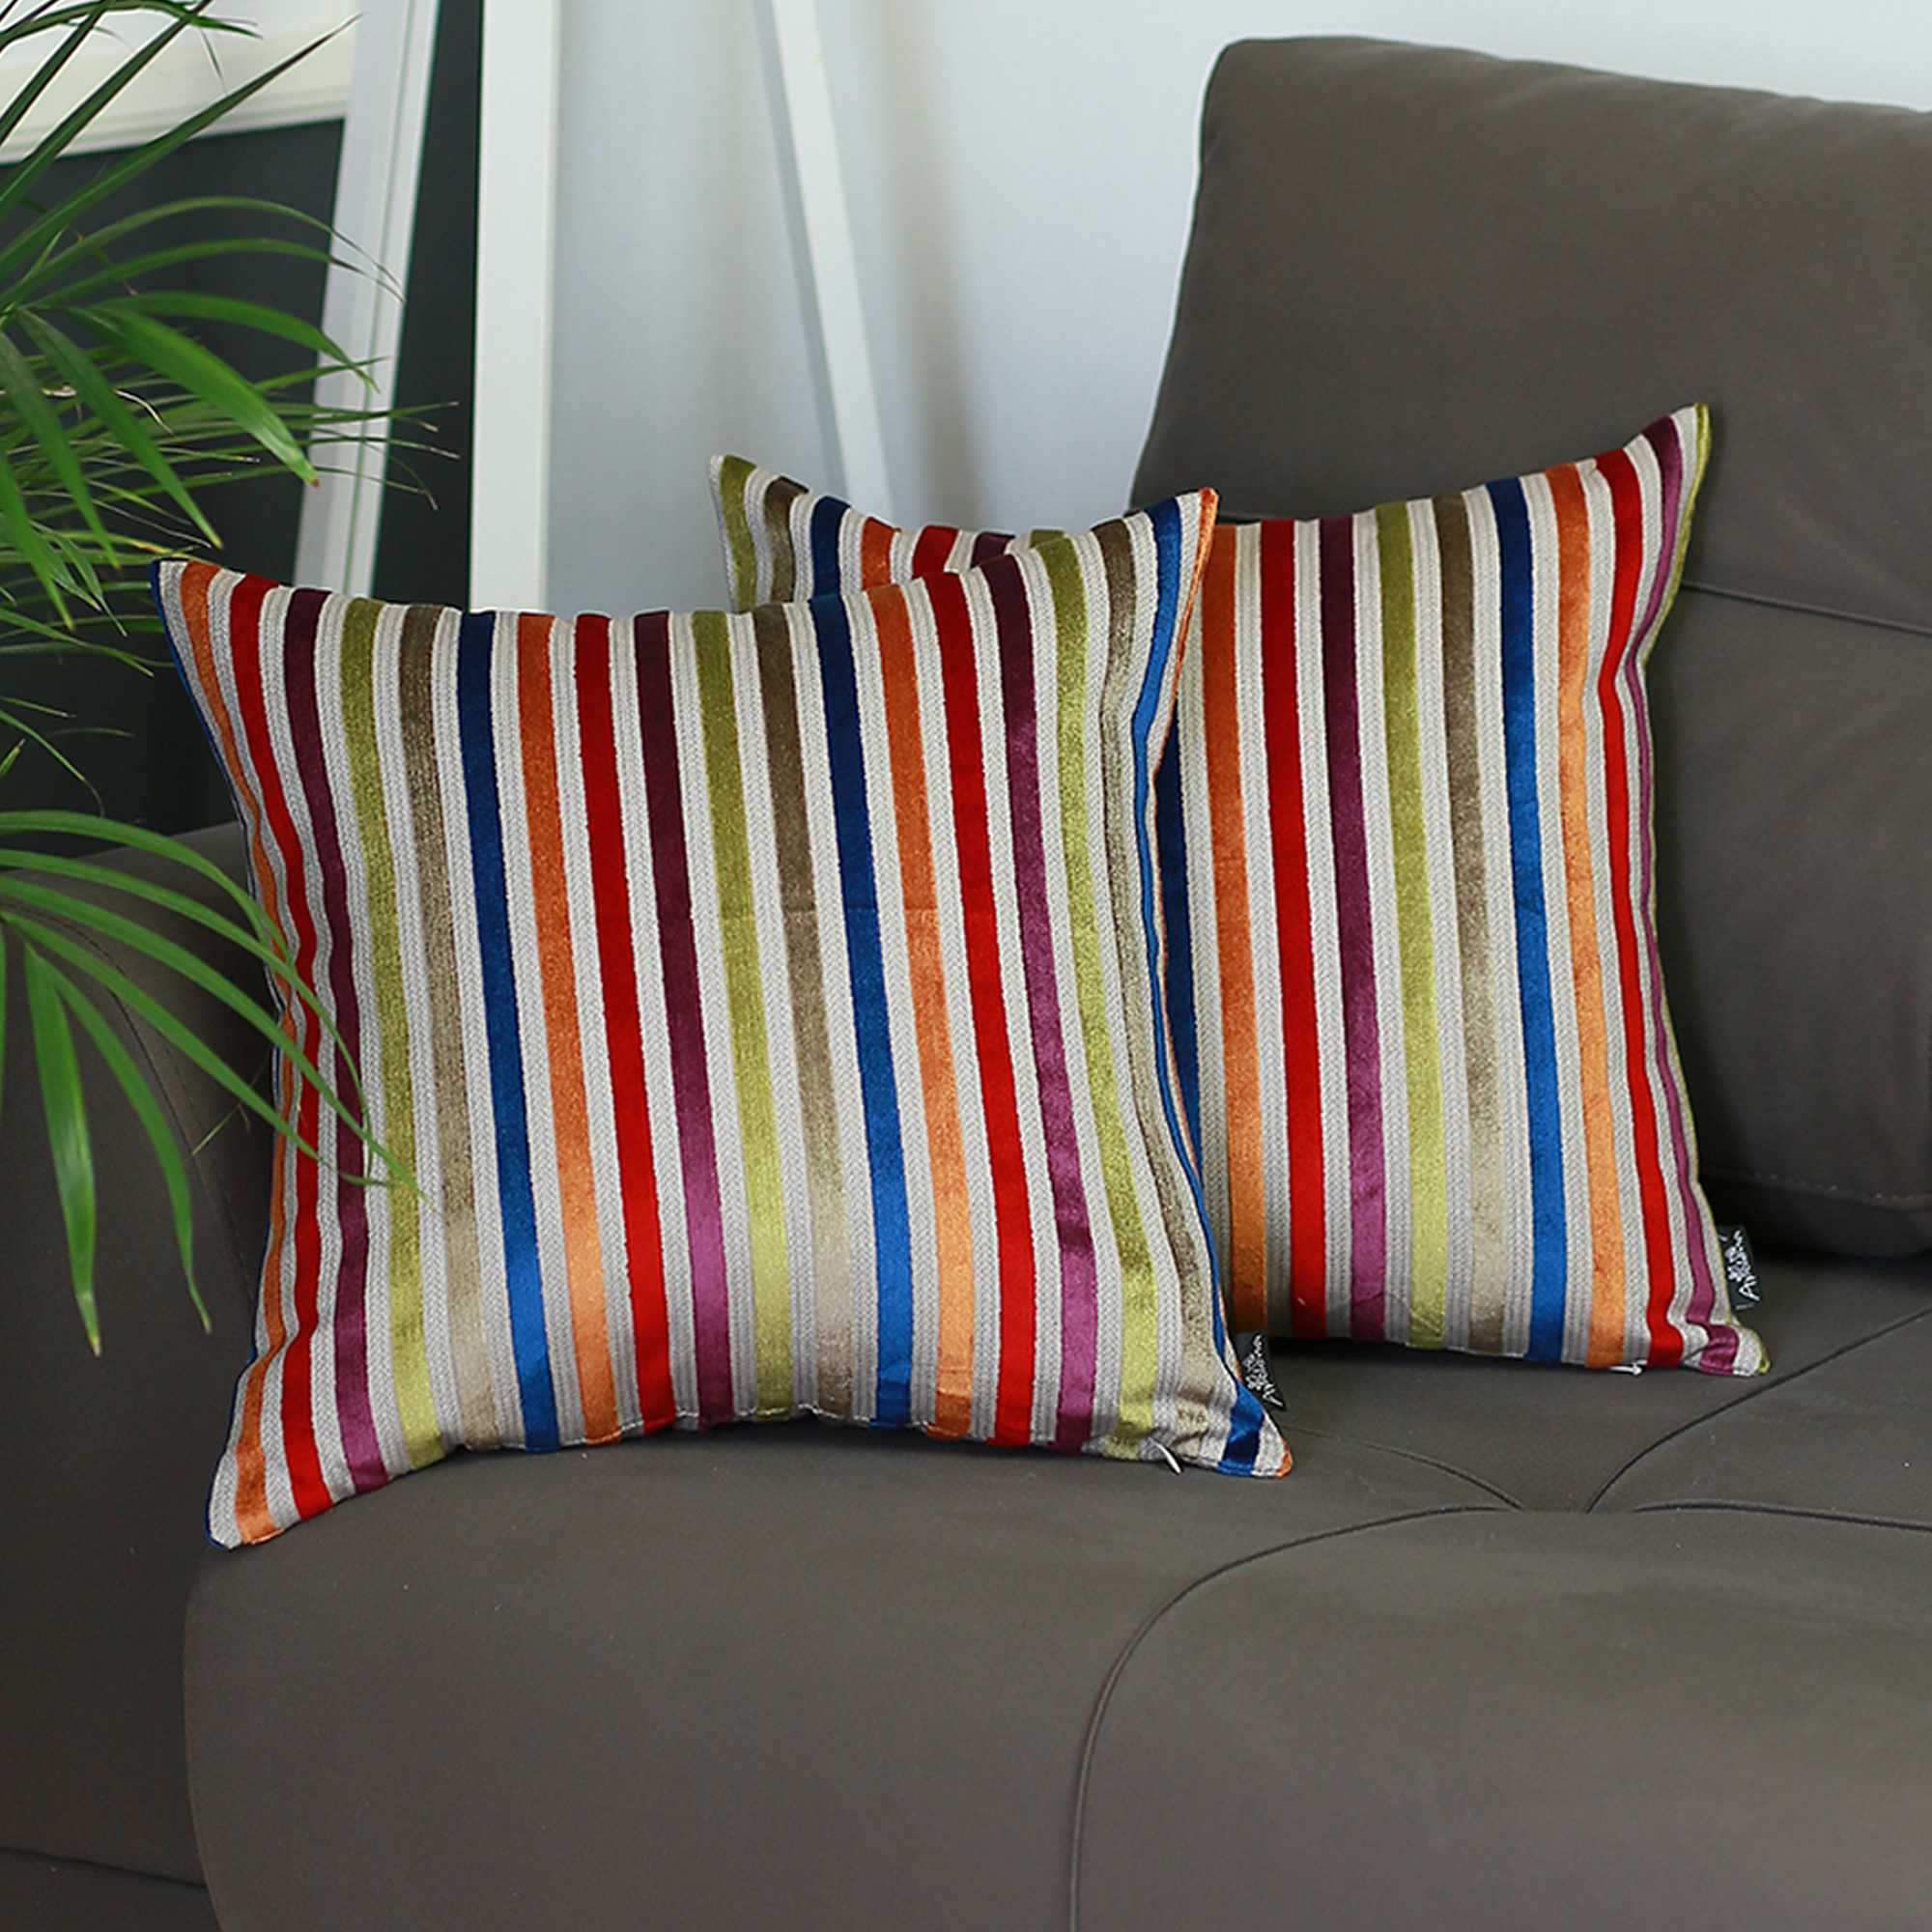 17"x17" Colored Velvet Lines Luxurious Throw Decorative Pillow Case Set of 2 pcs Square